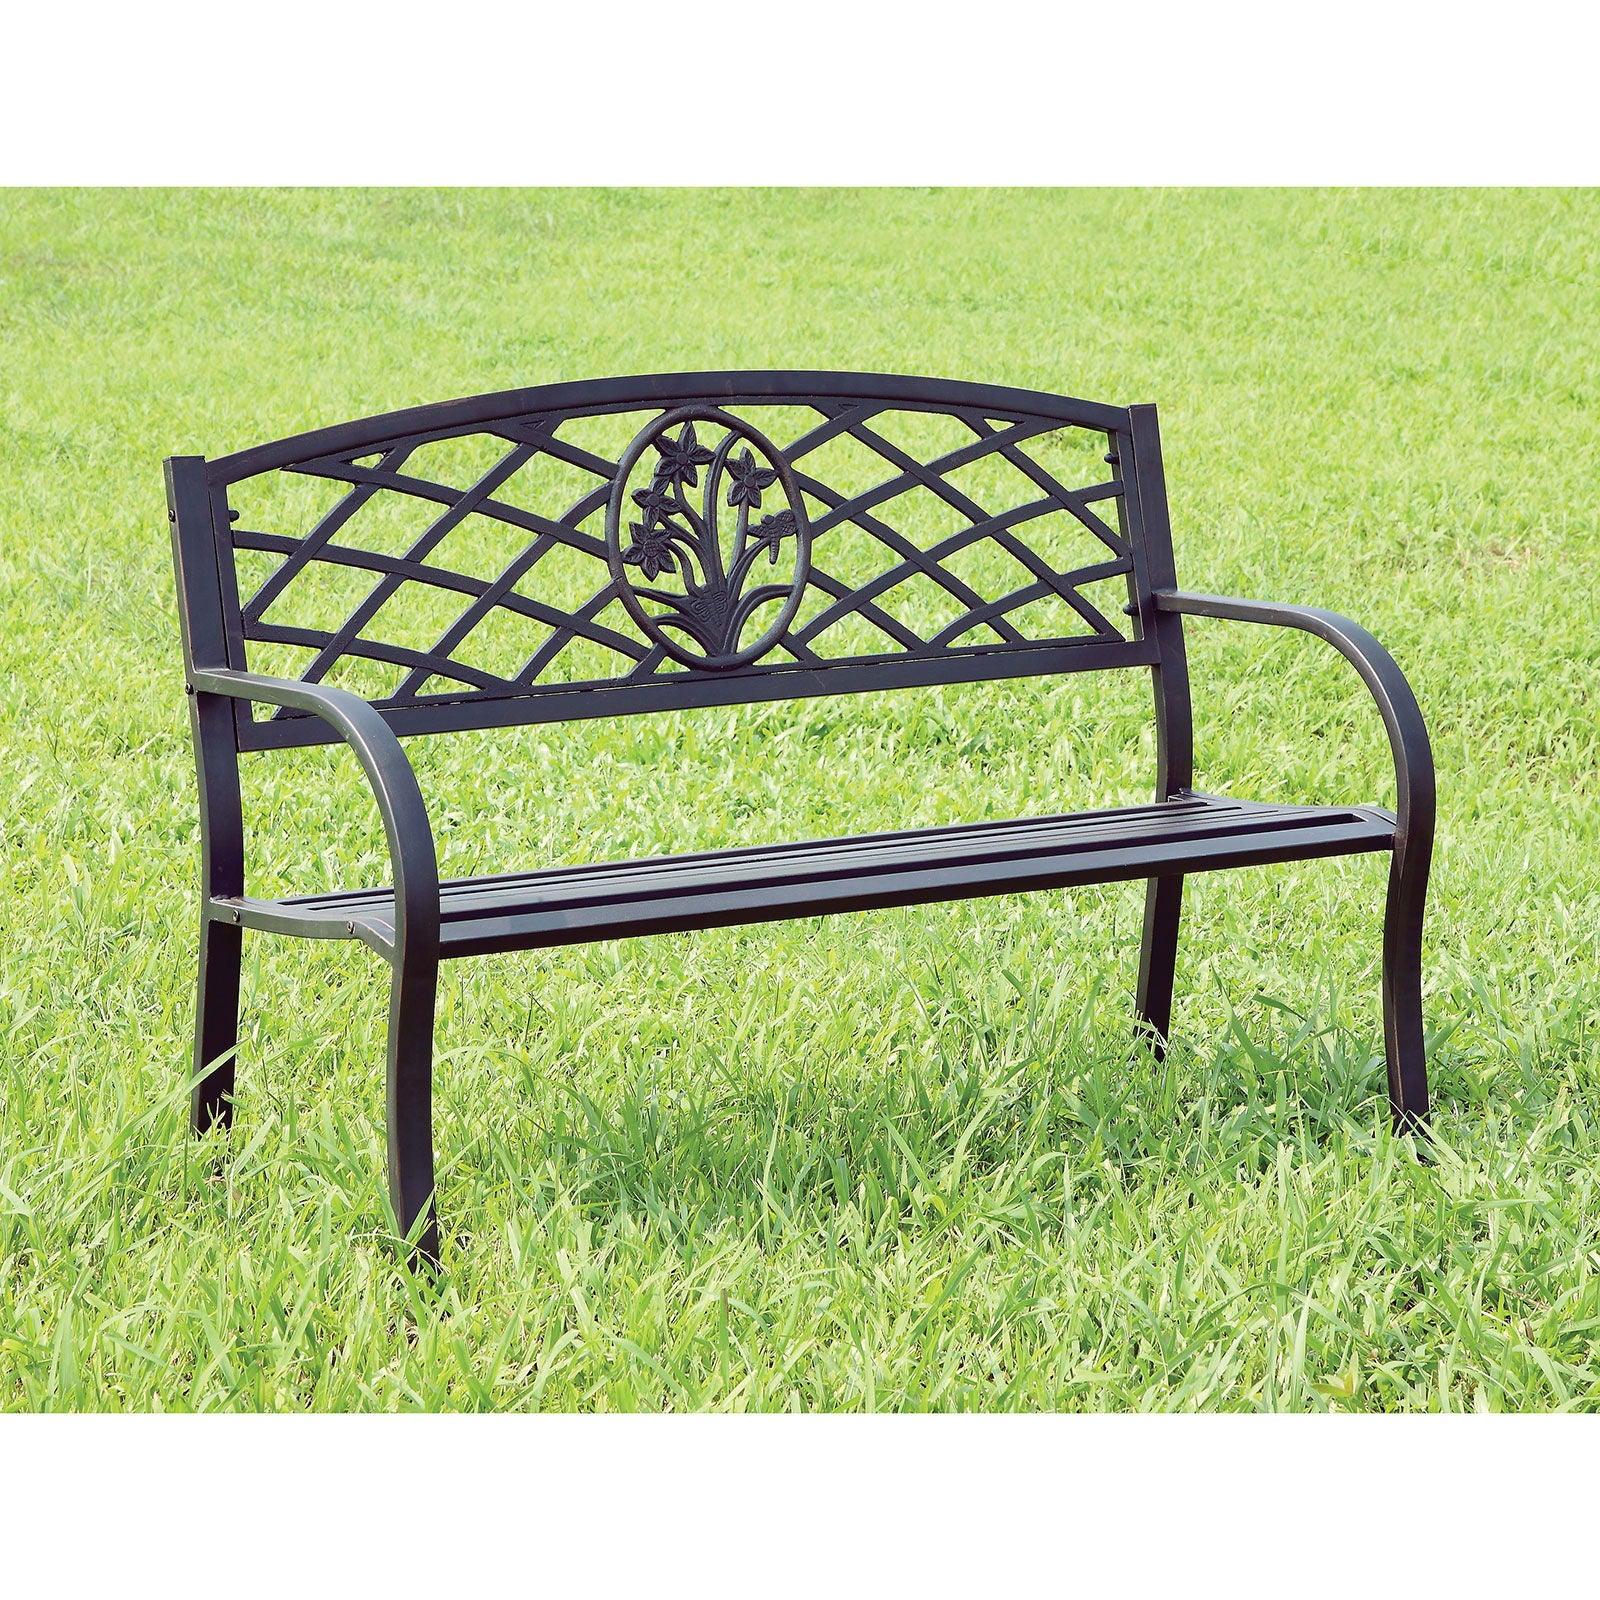 Furniture of America - Minot - Patio Steel Bench - Black - 5th Avenue Furniture